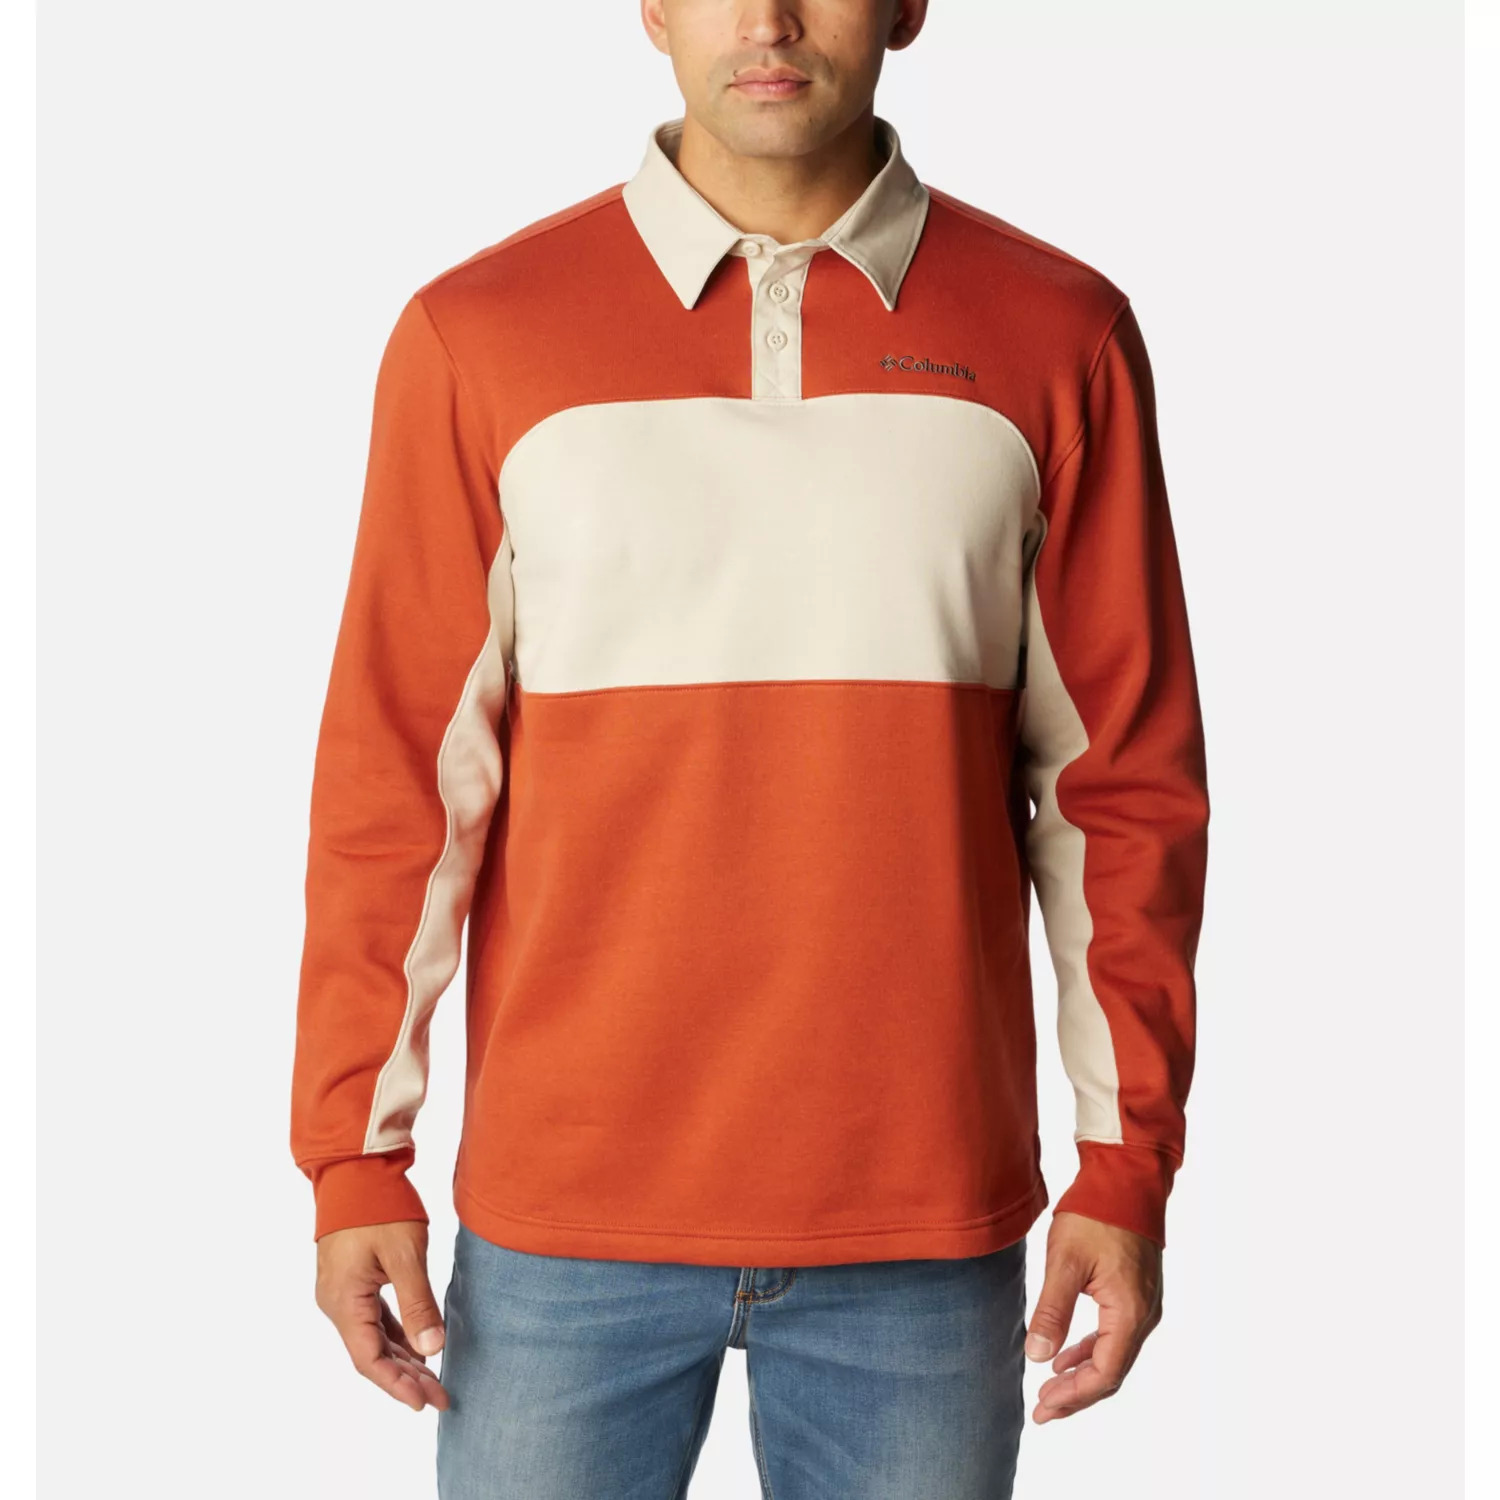 Columbia Men's Columbia Trek Long Sleeve Rugby Shirt (4 colors) $25 + Free Shipping